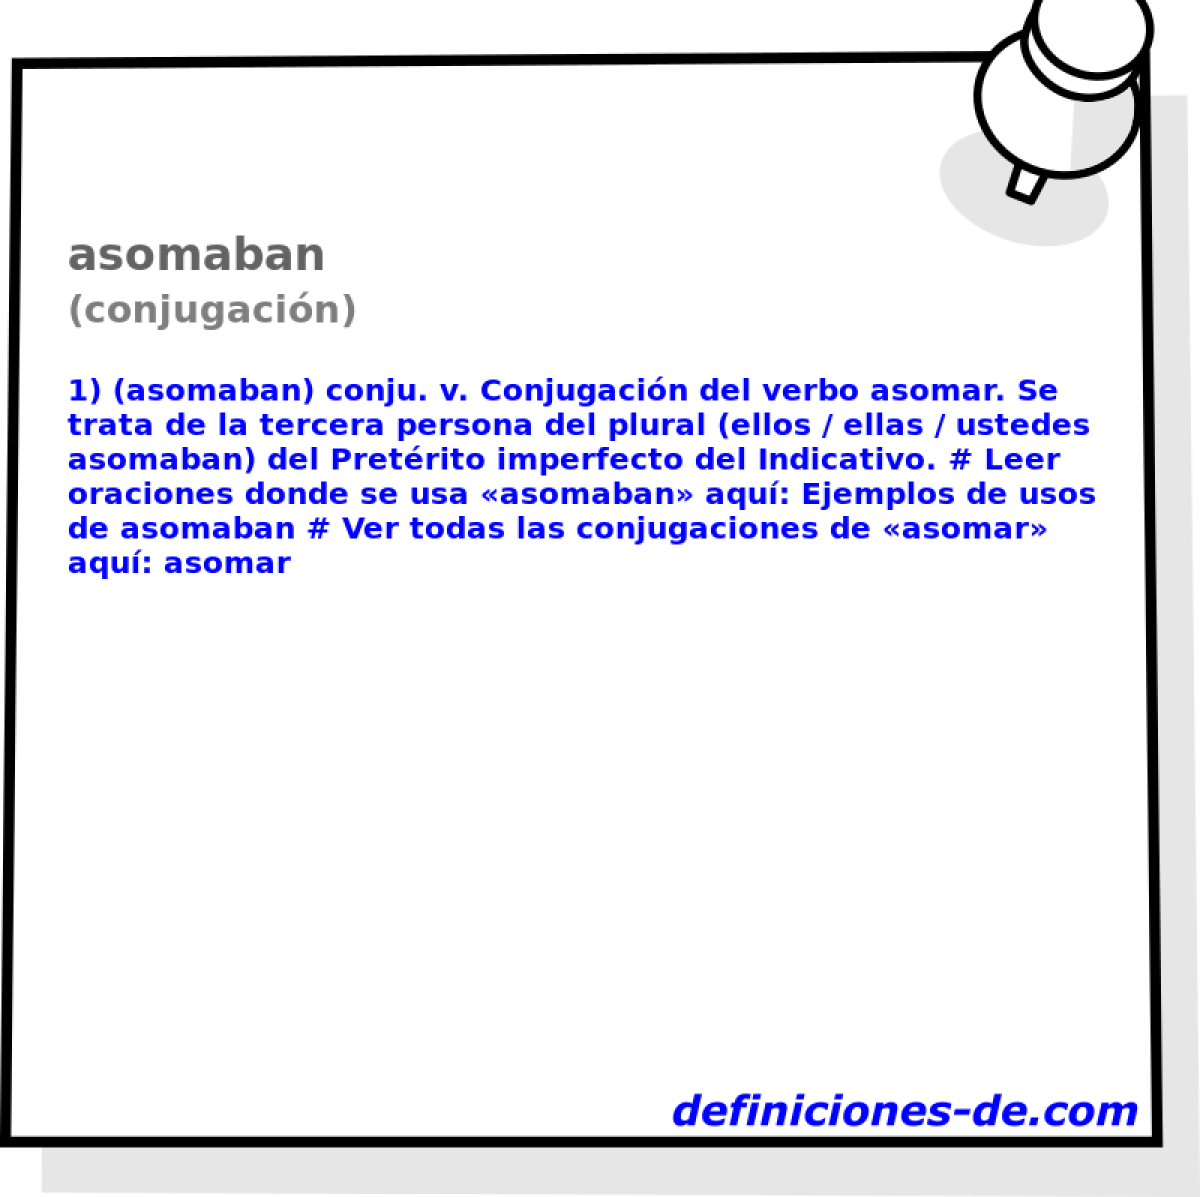 asomaban (conjugacin)